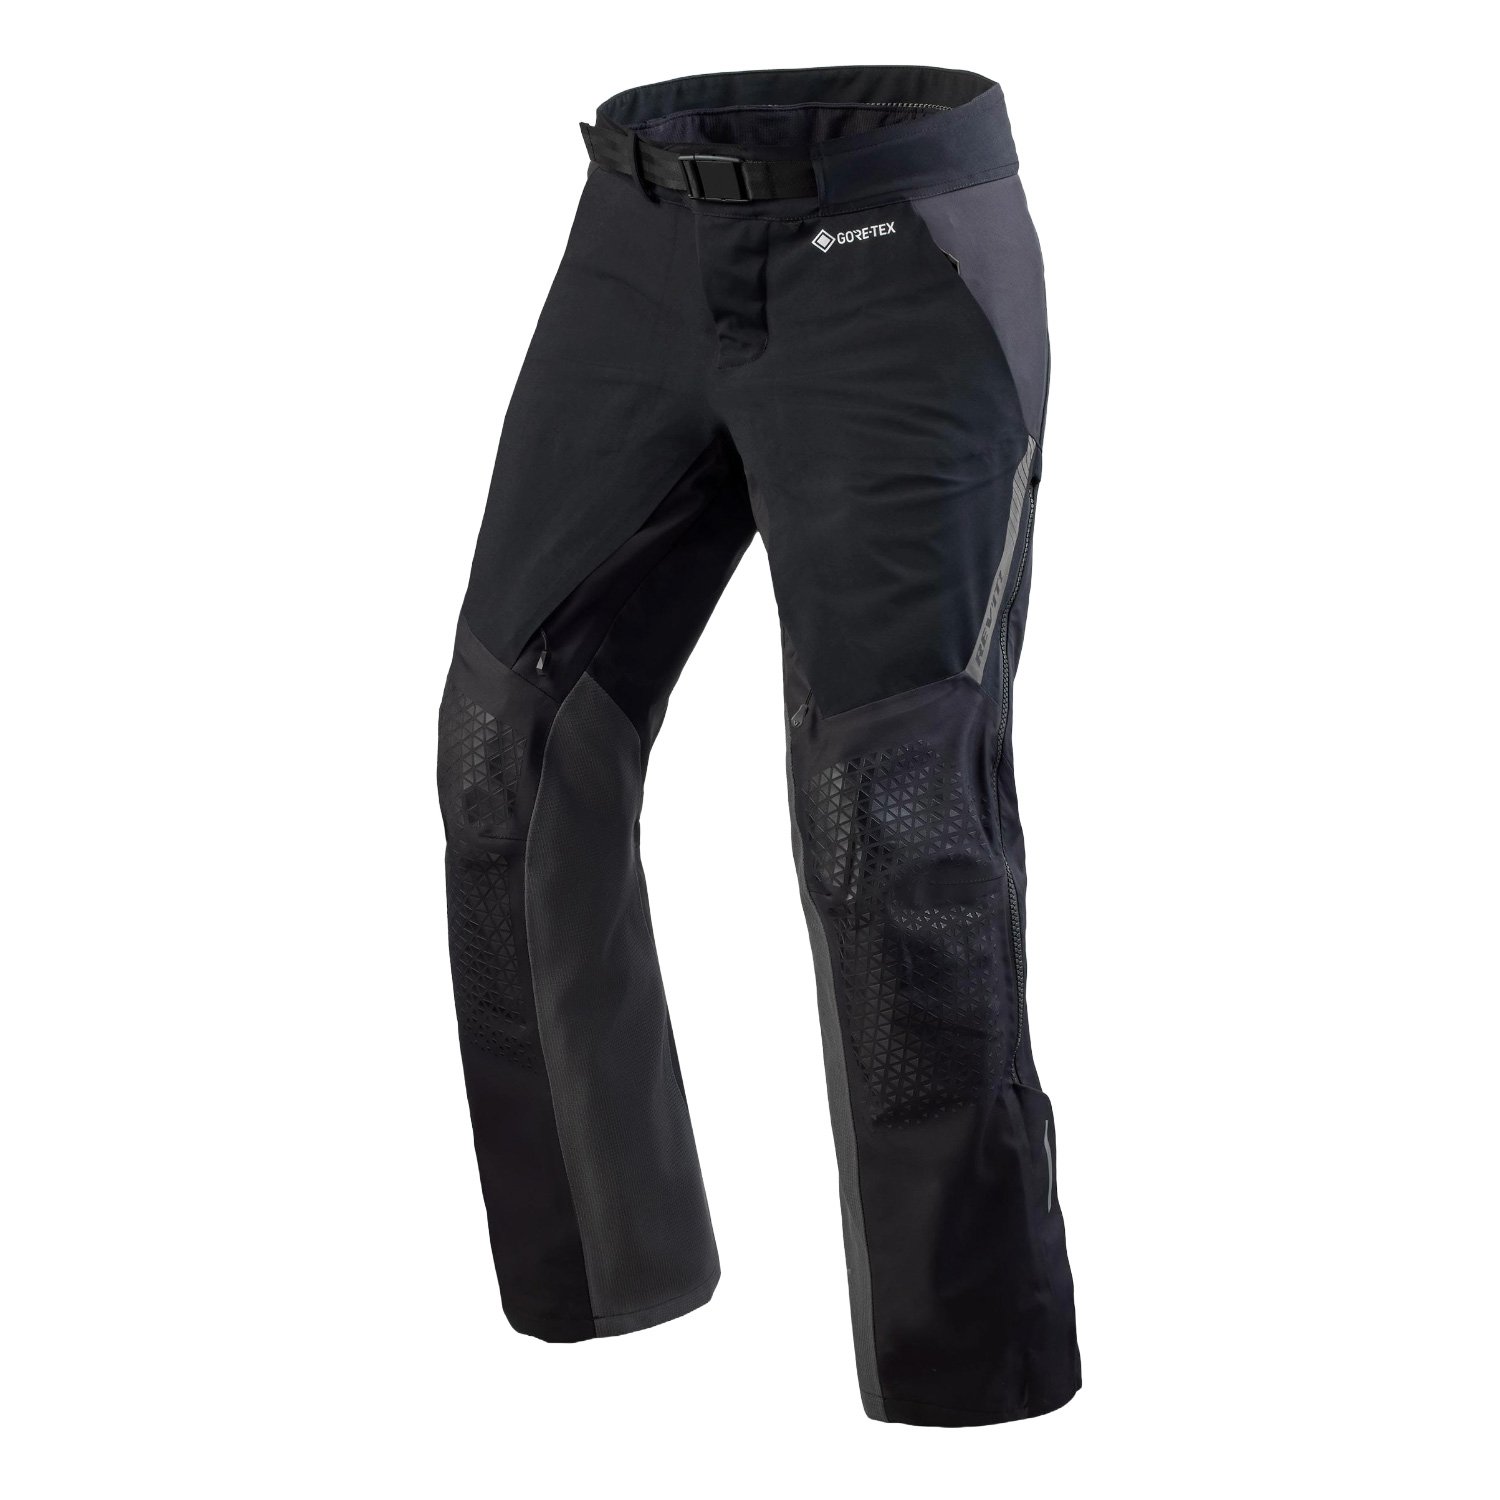 Image of REV'IT! Stratum GTX Black Grey Standard Motorcycle Pants Size 4XL ID 8700001351188